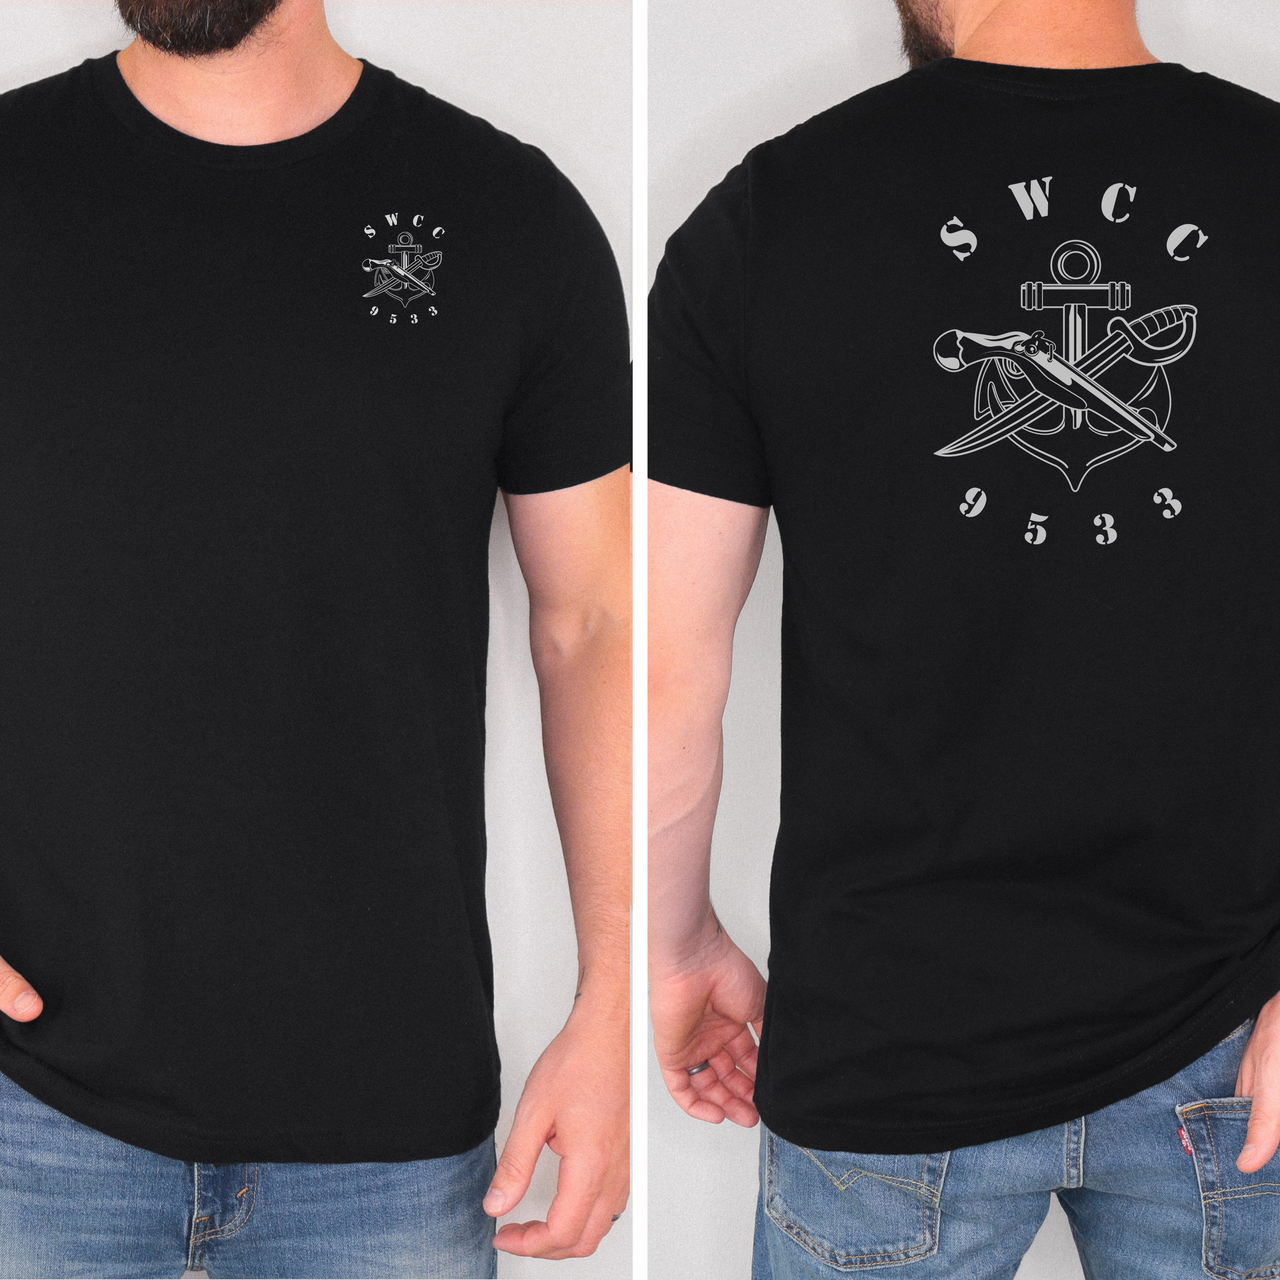 Special Warfare Combatant Craft Crewmen, 9533, T-Shirt (White)